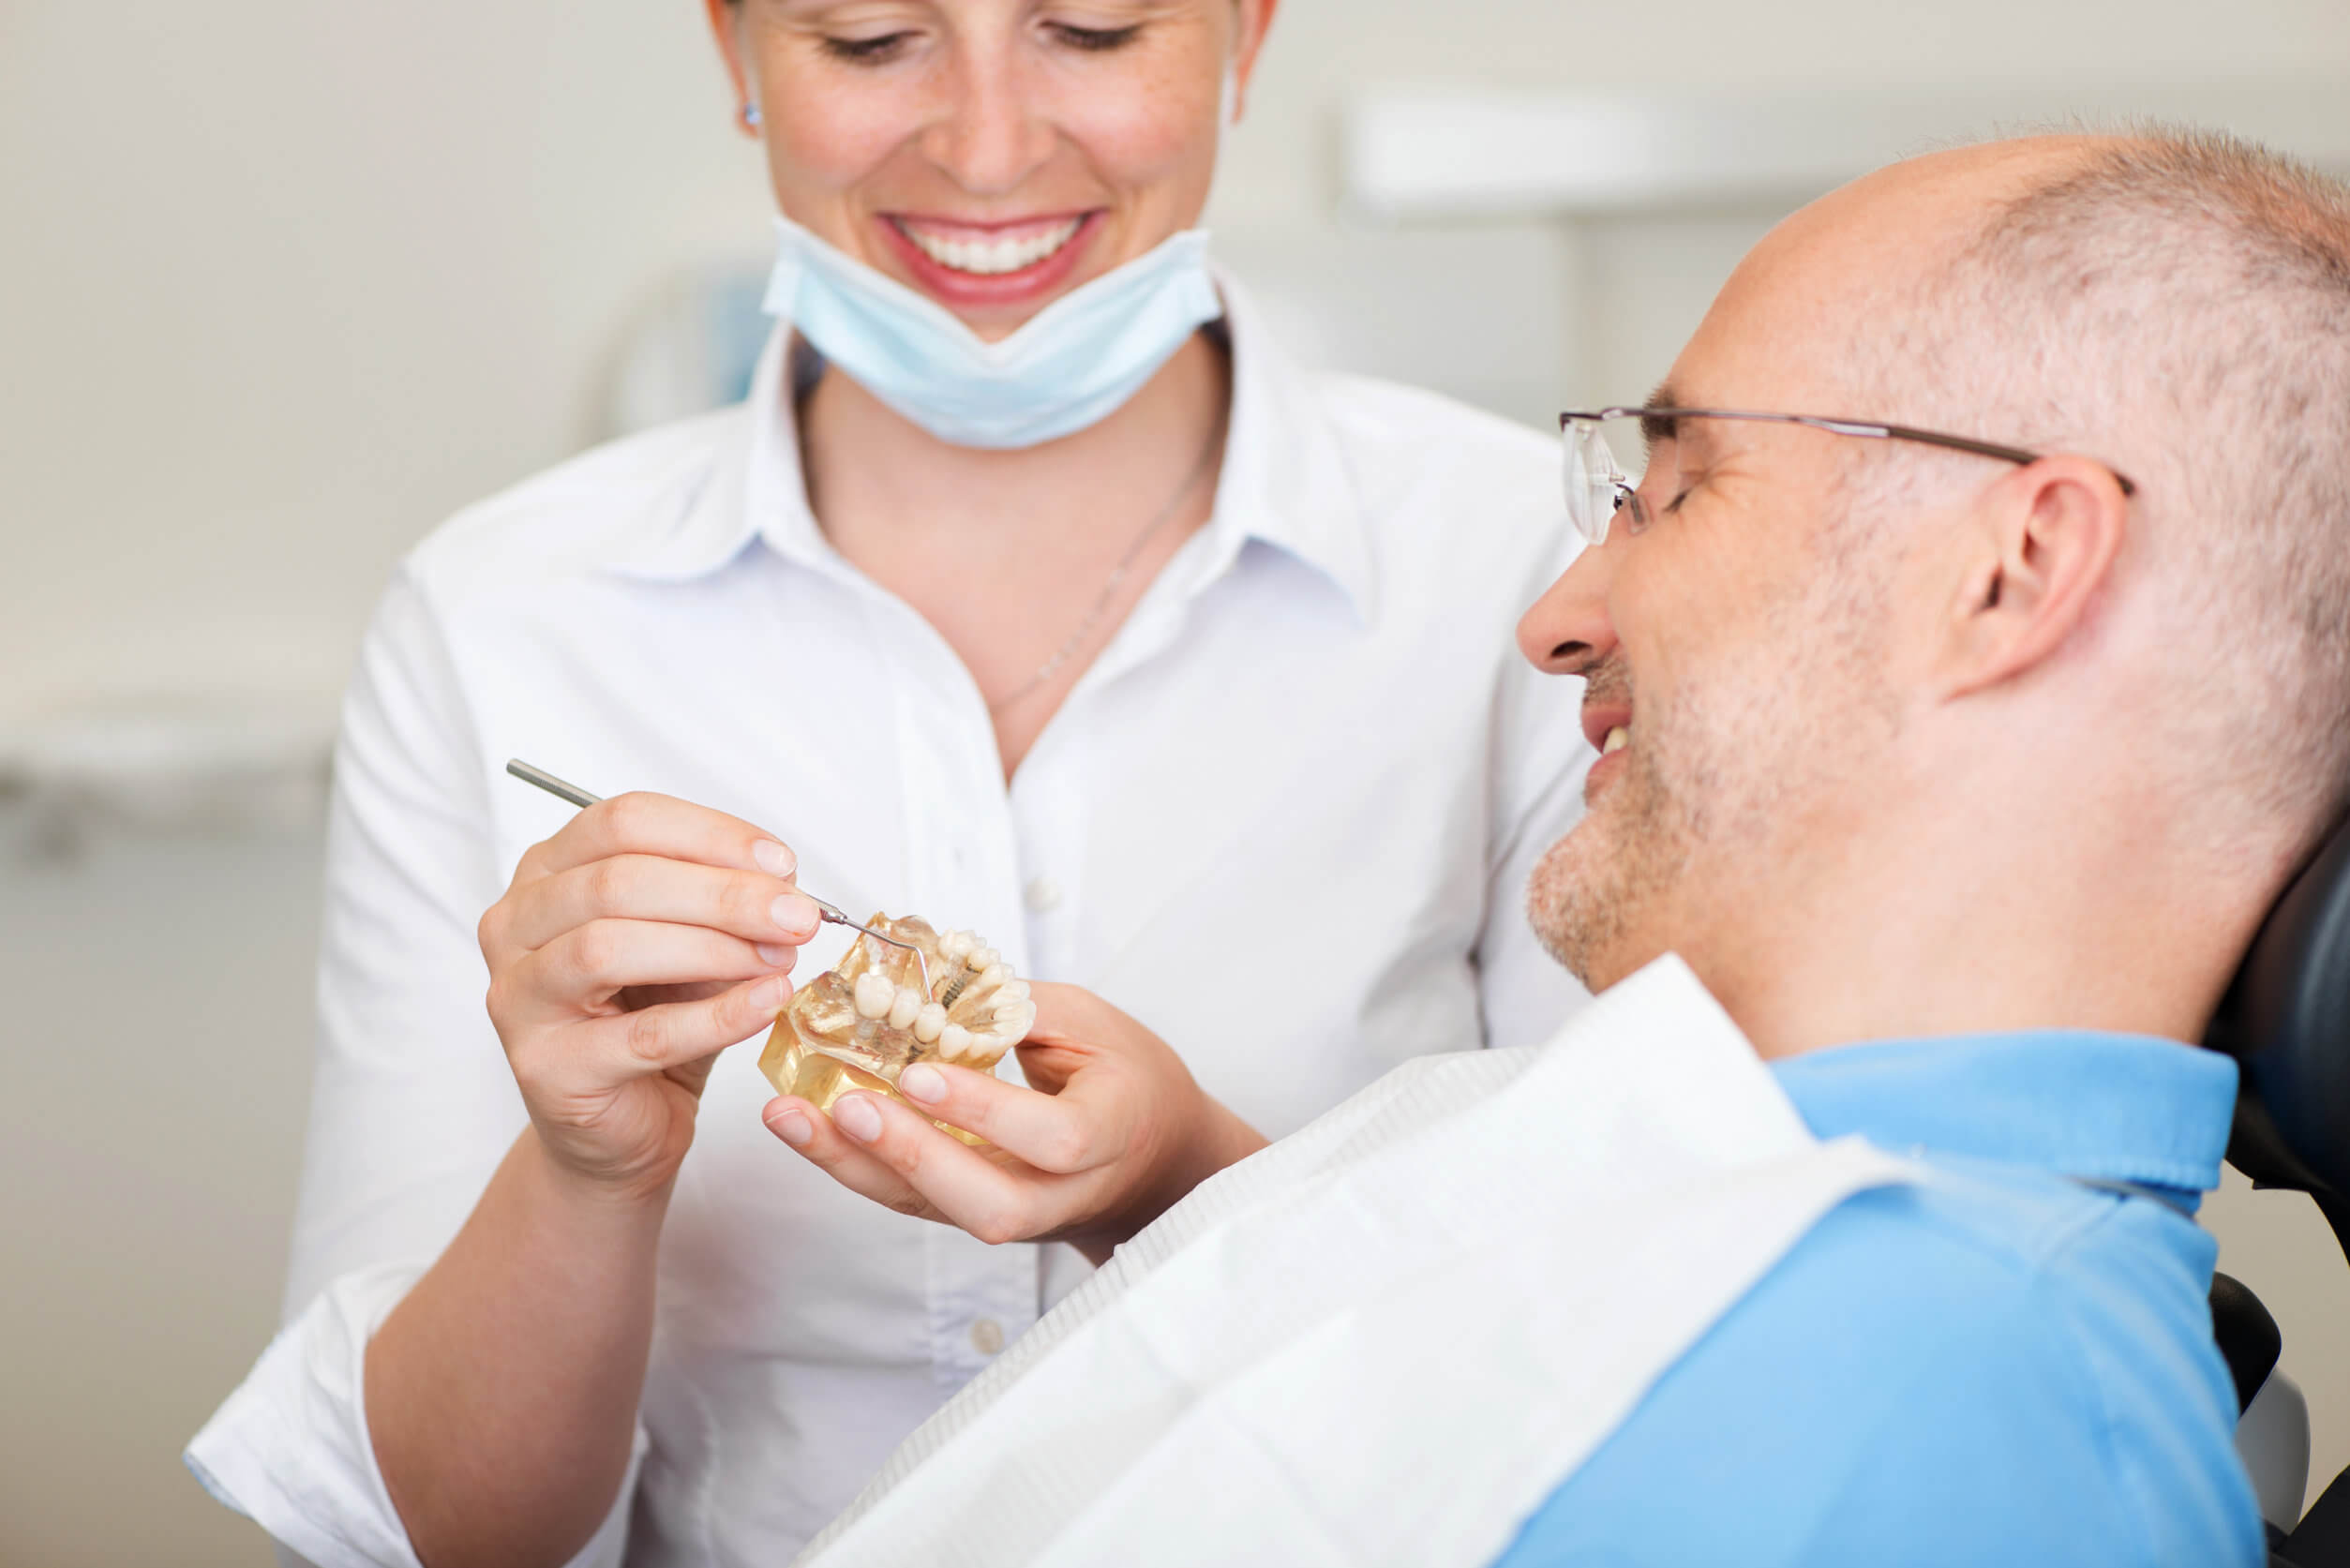 Implantologie-Beratung Zahnimplantate bei Dr. Noack - Zahnarzt Würzburg